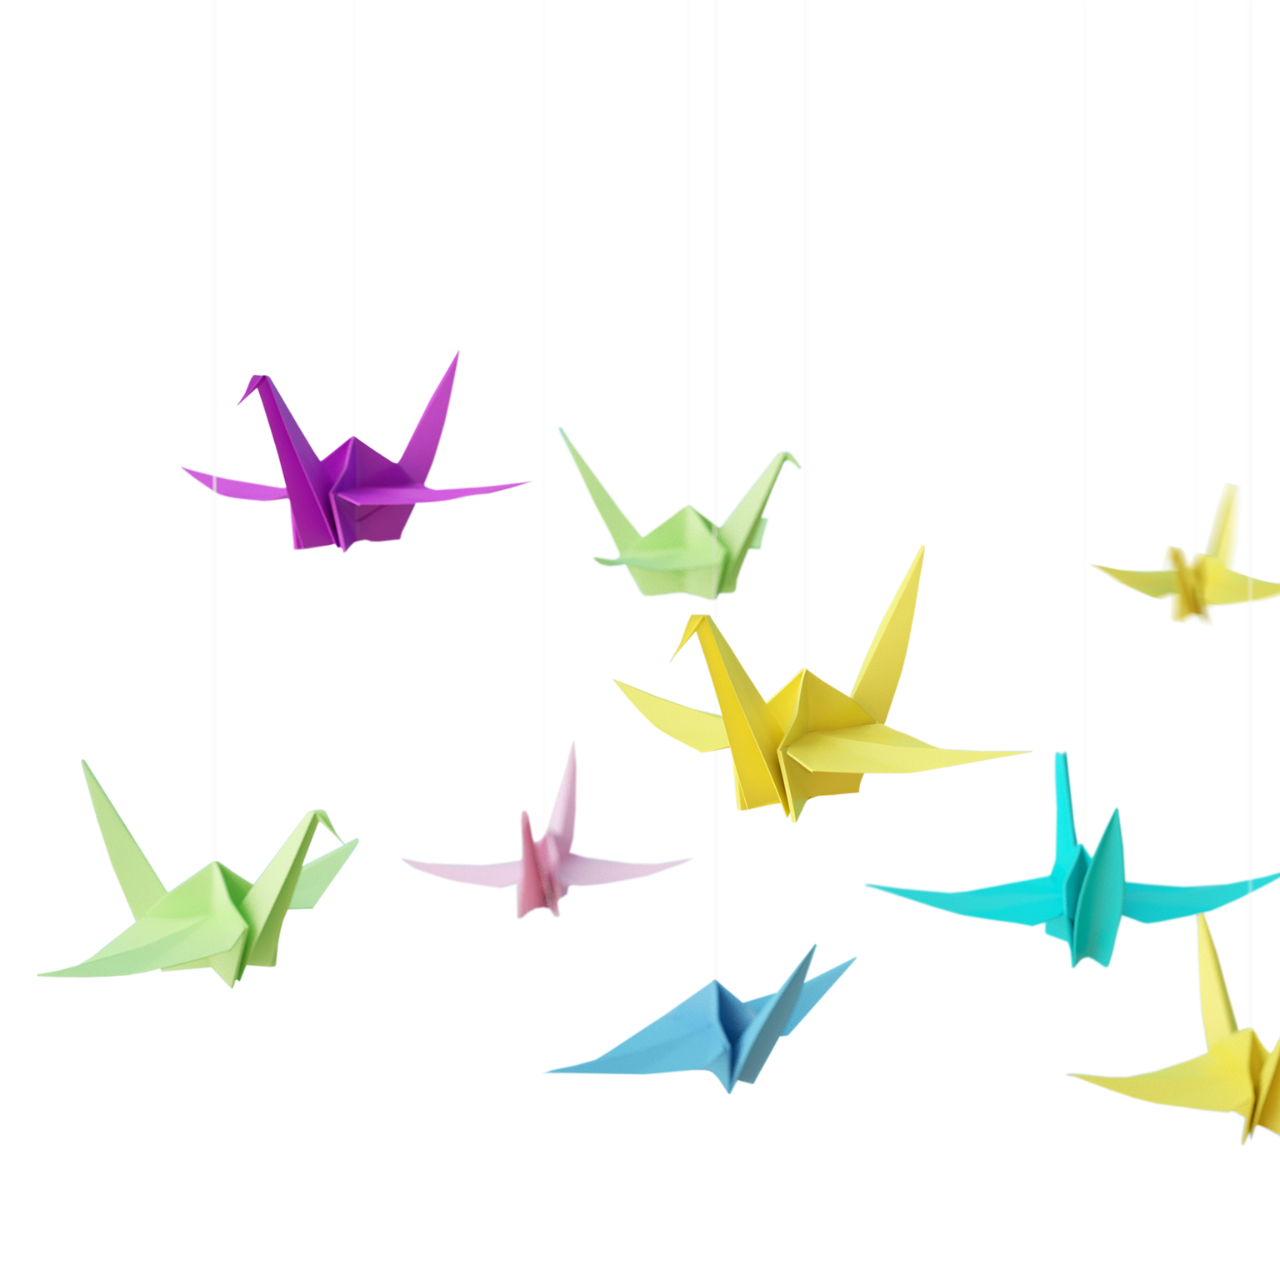 3D illustration-Colorful pastel origami paper cranes